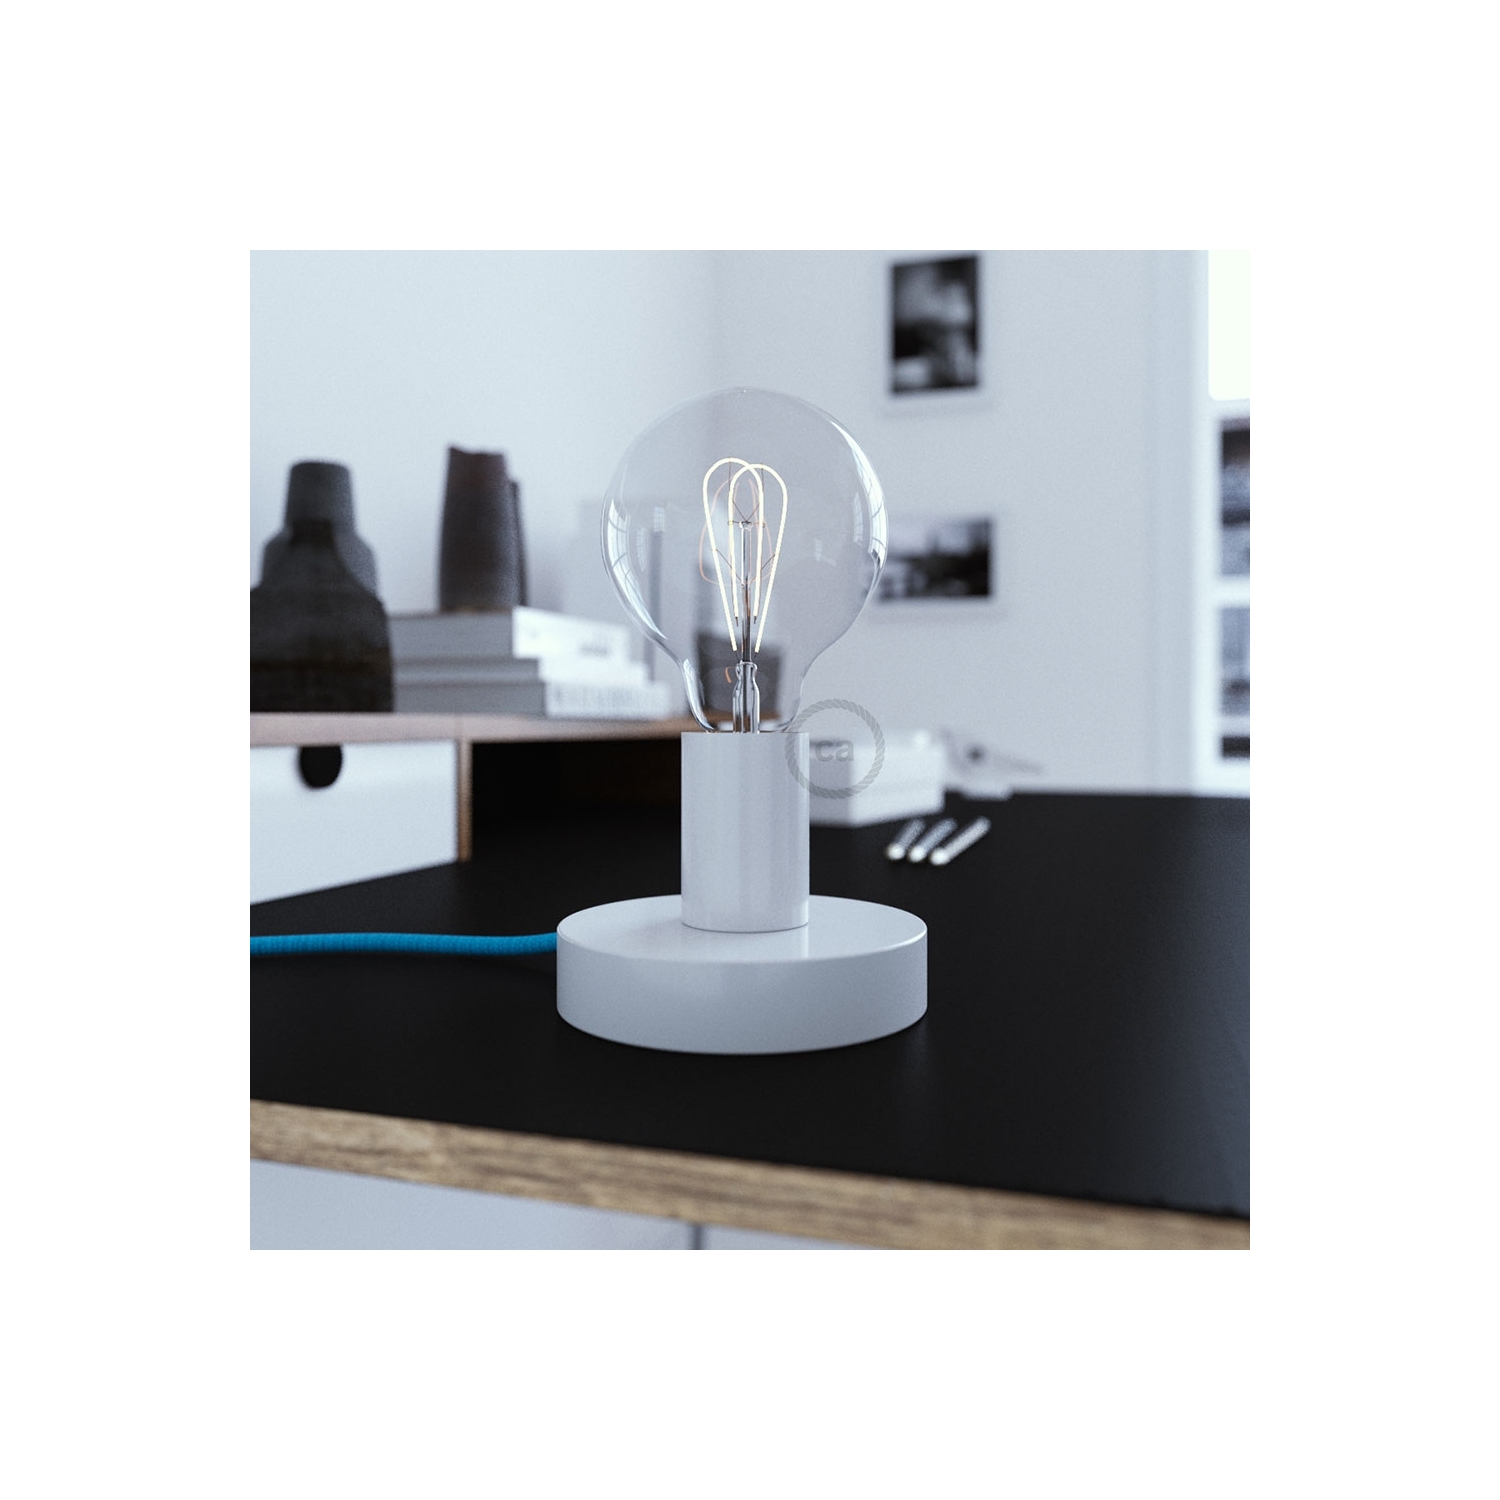 The Posaluce | White Metal Table Lamp